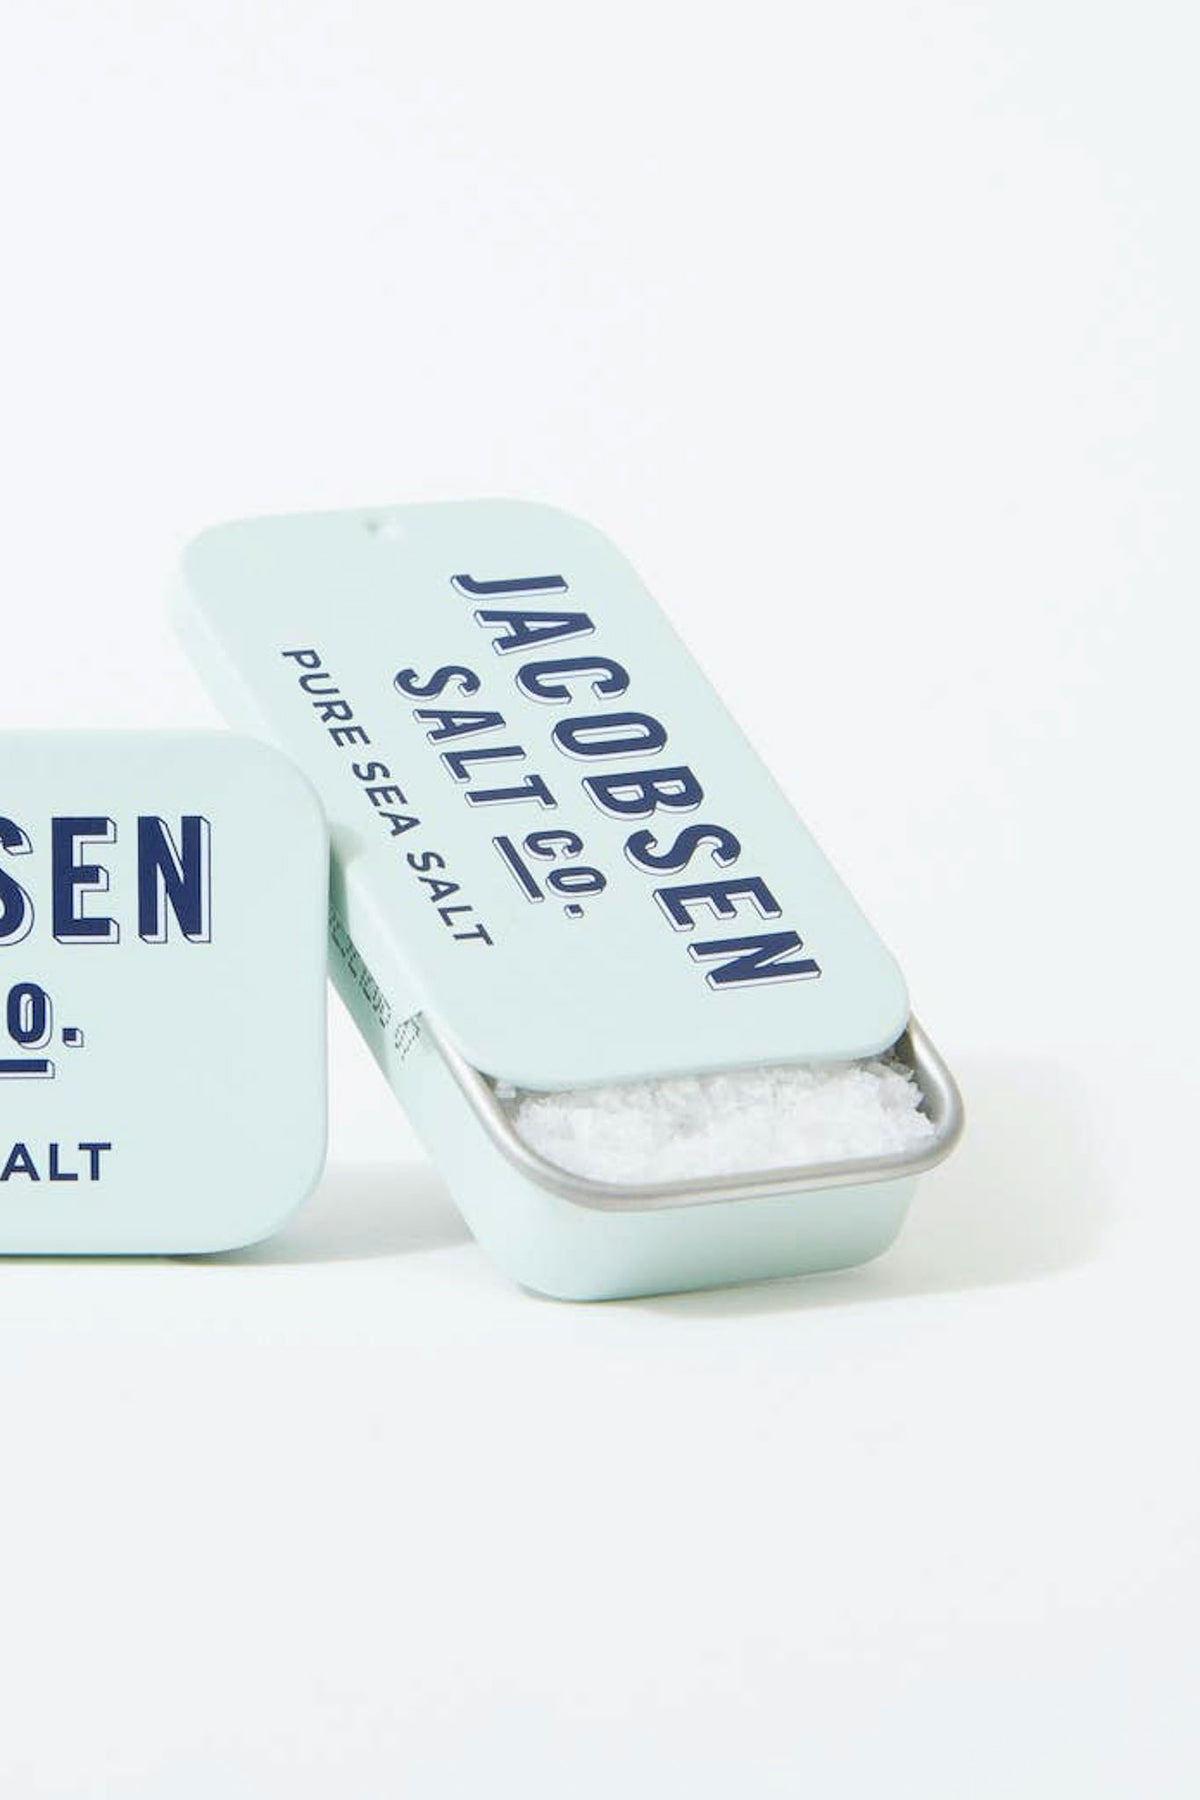 Jacobsen Salt Co. Kosher Sea Salt Slide Tins